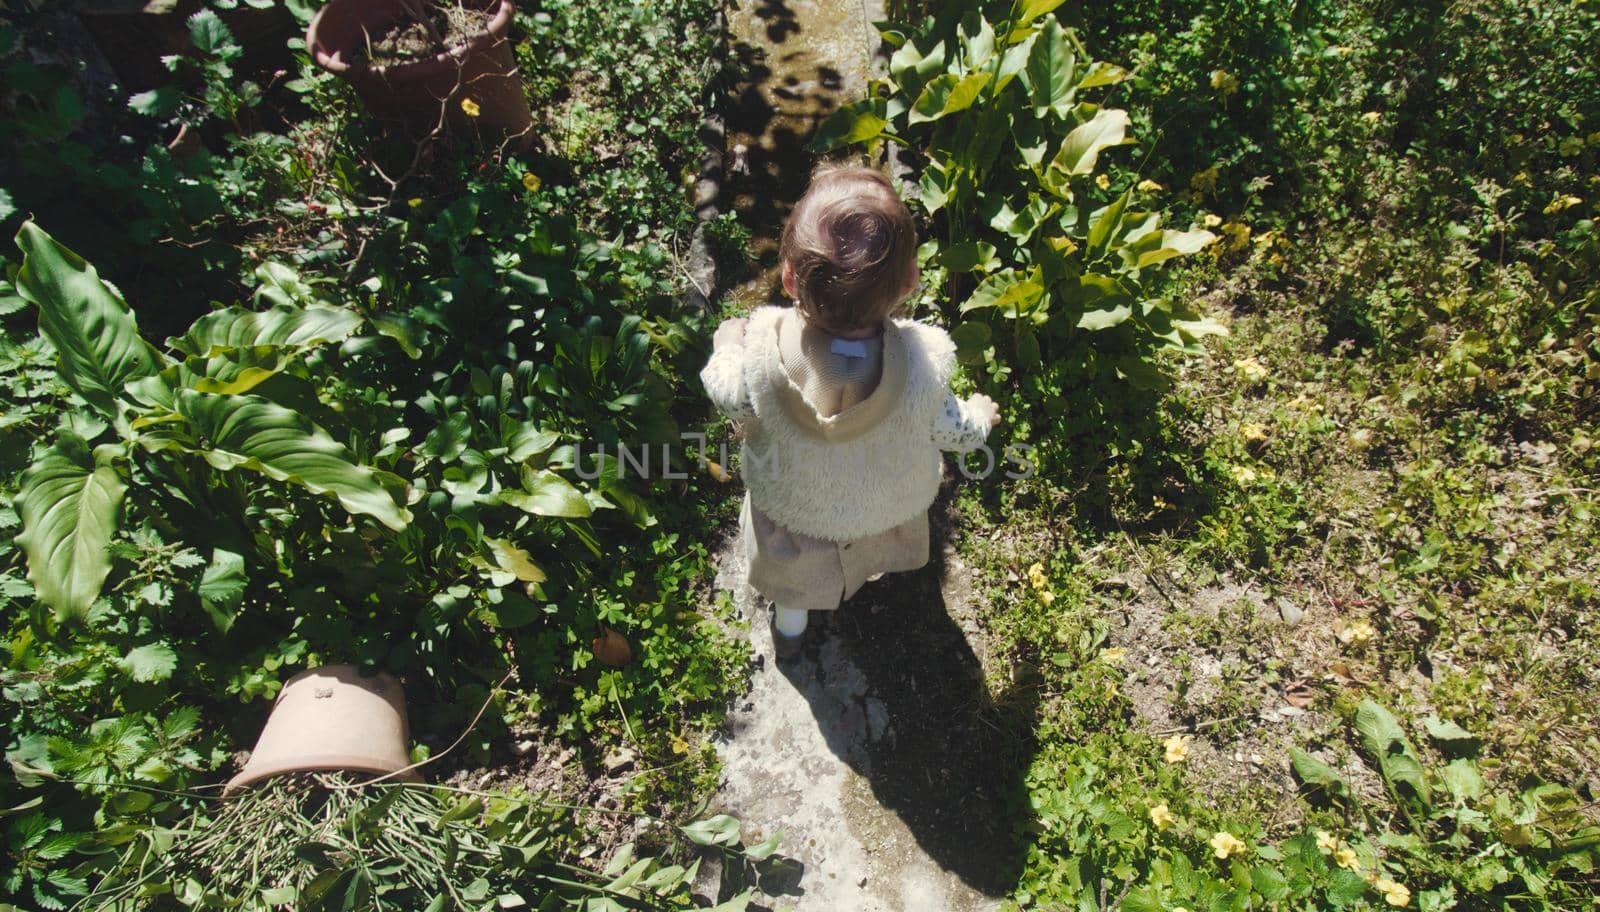 Baby girl walking down an overgrown garden path